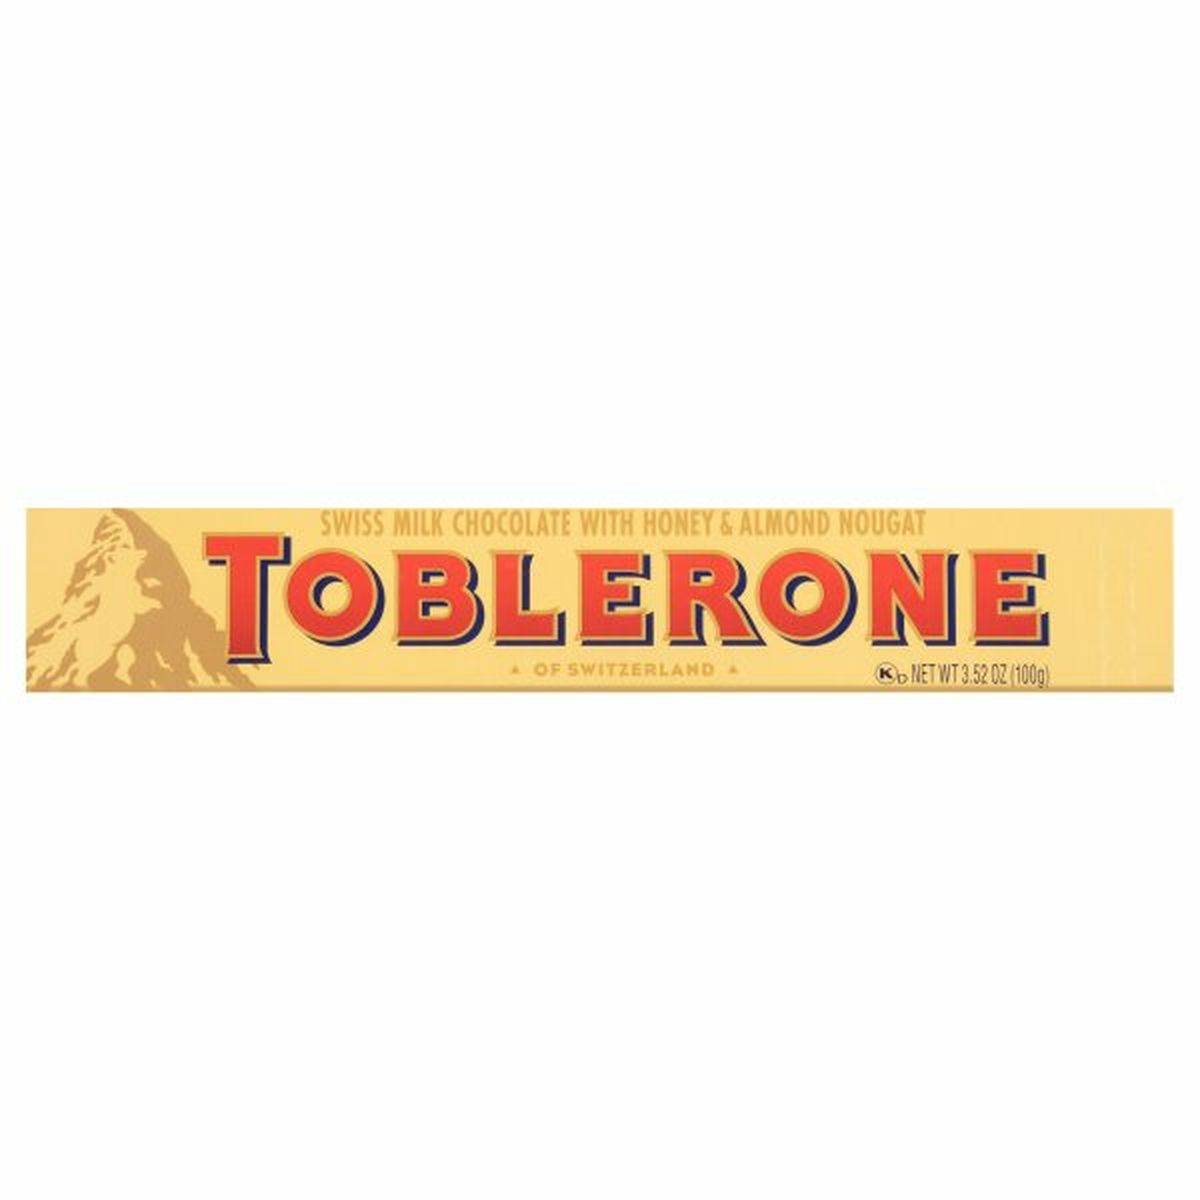 Calories in Toblerone Milk Chocolate, Swiss, Honey & Almond Nougat